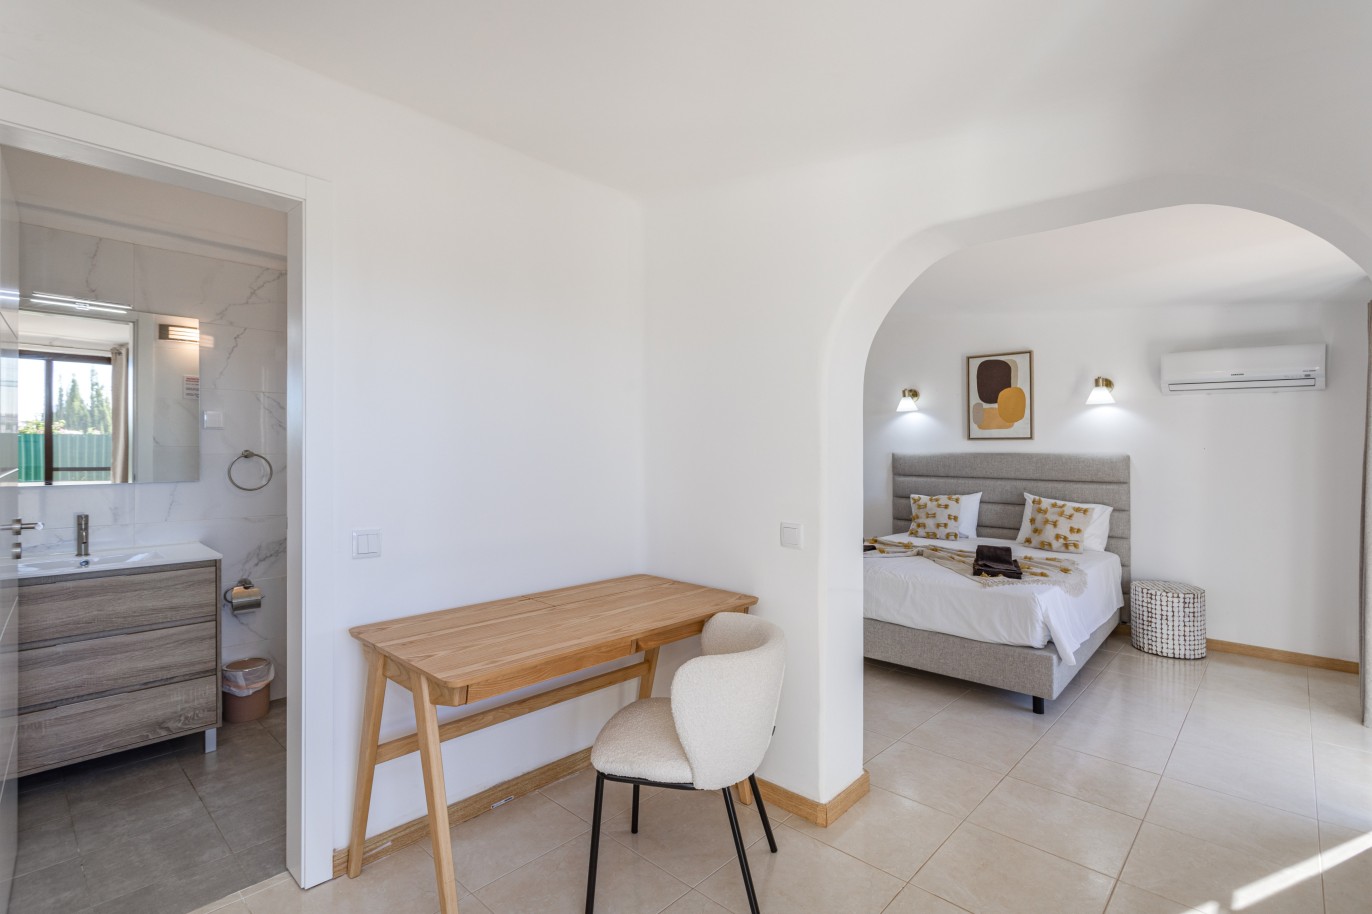 4 bedroom villa with pool, for sale in Albufeira, Algarve_233599